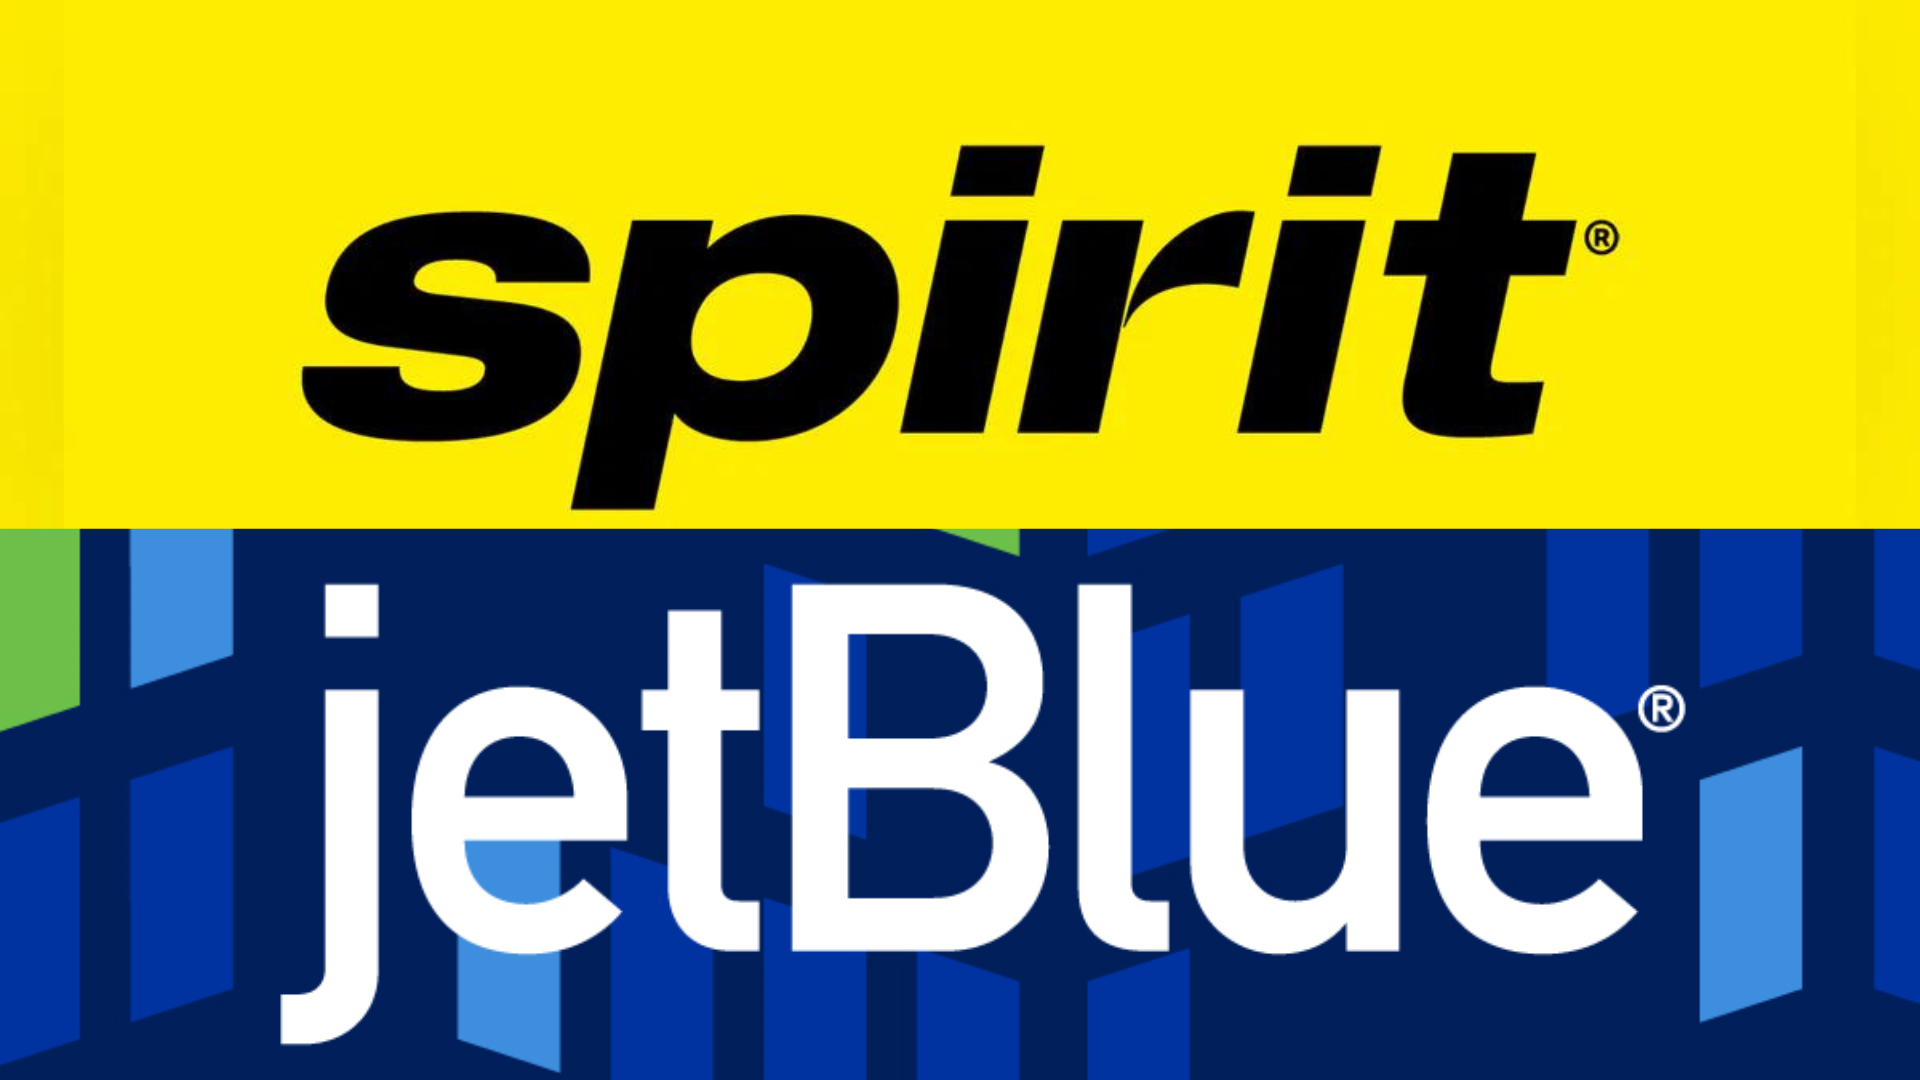 JetBlue anuncia que se fusionará con Spirit Airlines